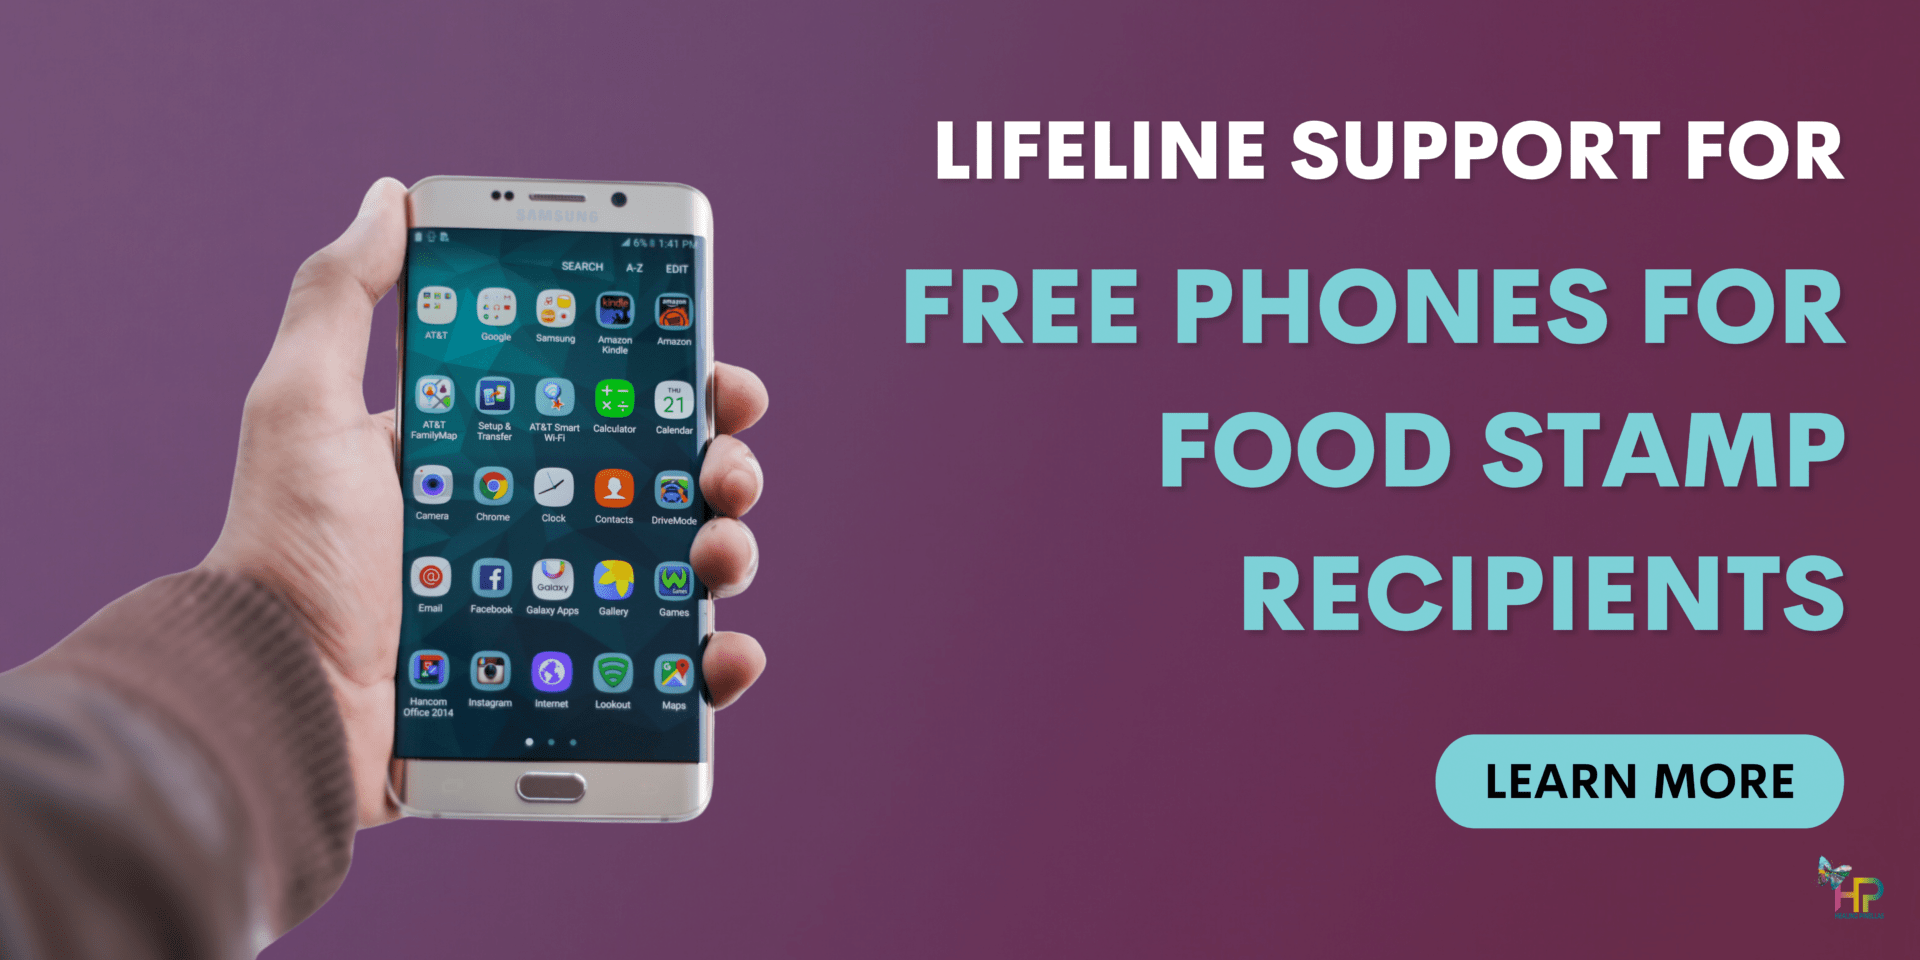 Free Phones for Food Stamp Recipients - Florida